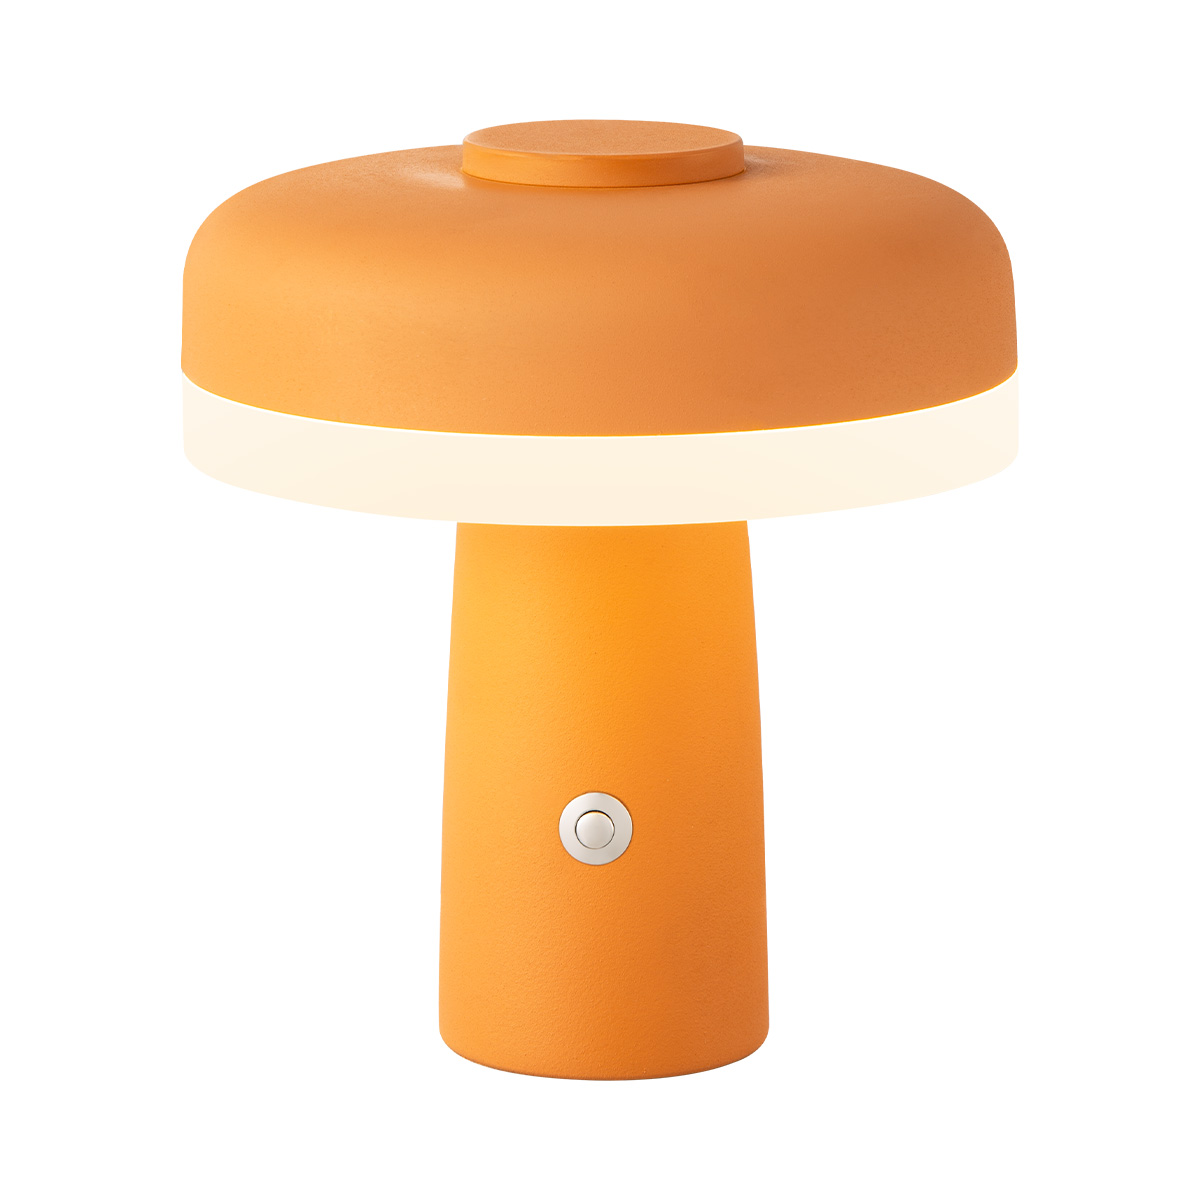 Tangla lighting - TLT7499-01OG - LED Table lamp - rechargeable metal and glass - orange - rechargeable